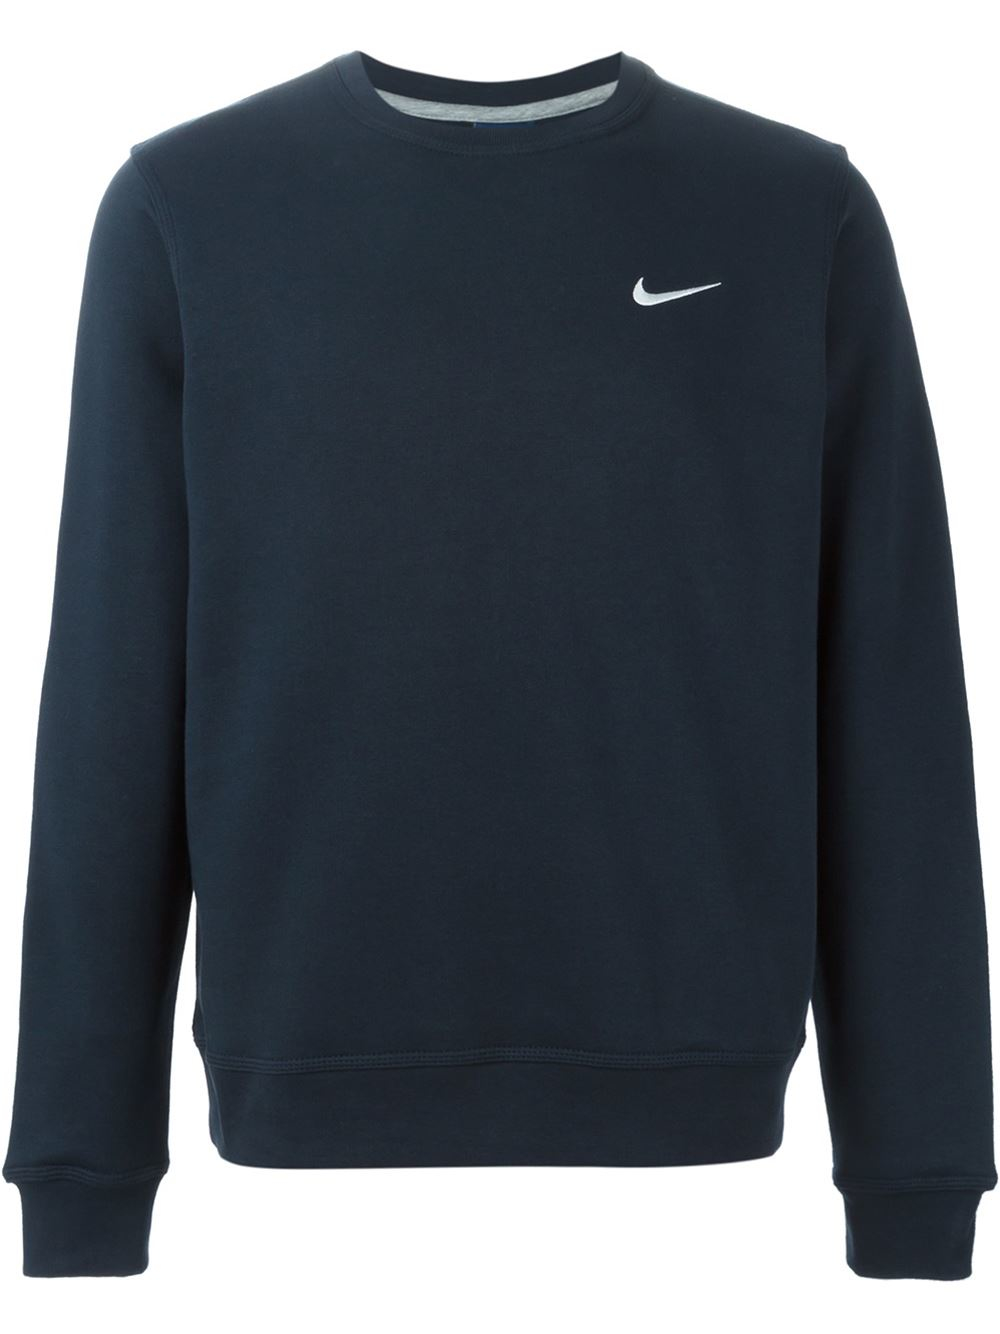 Lyst - Nike 'club Crew' Sweatshirt in Blue for Men